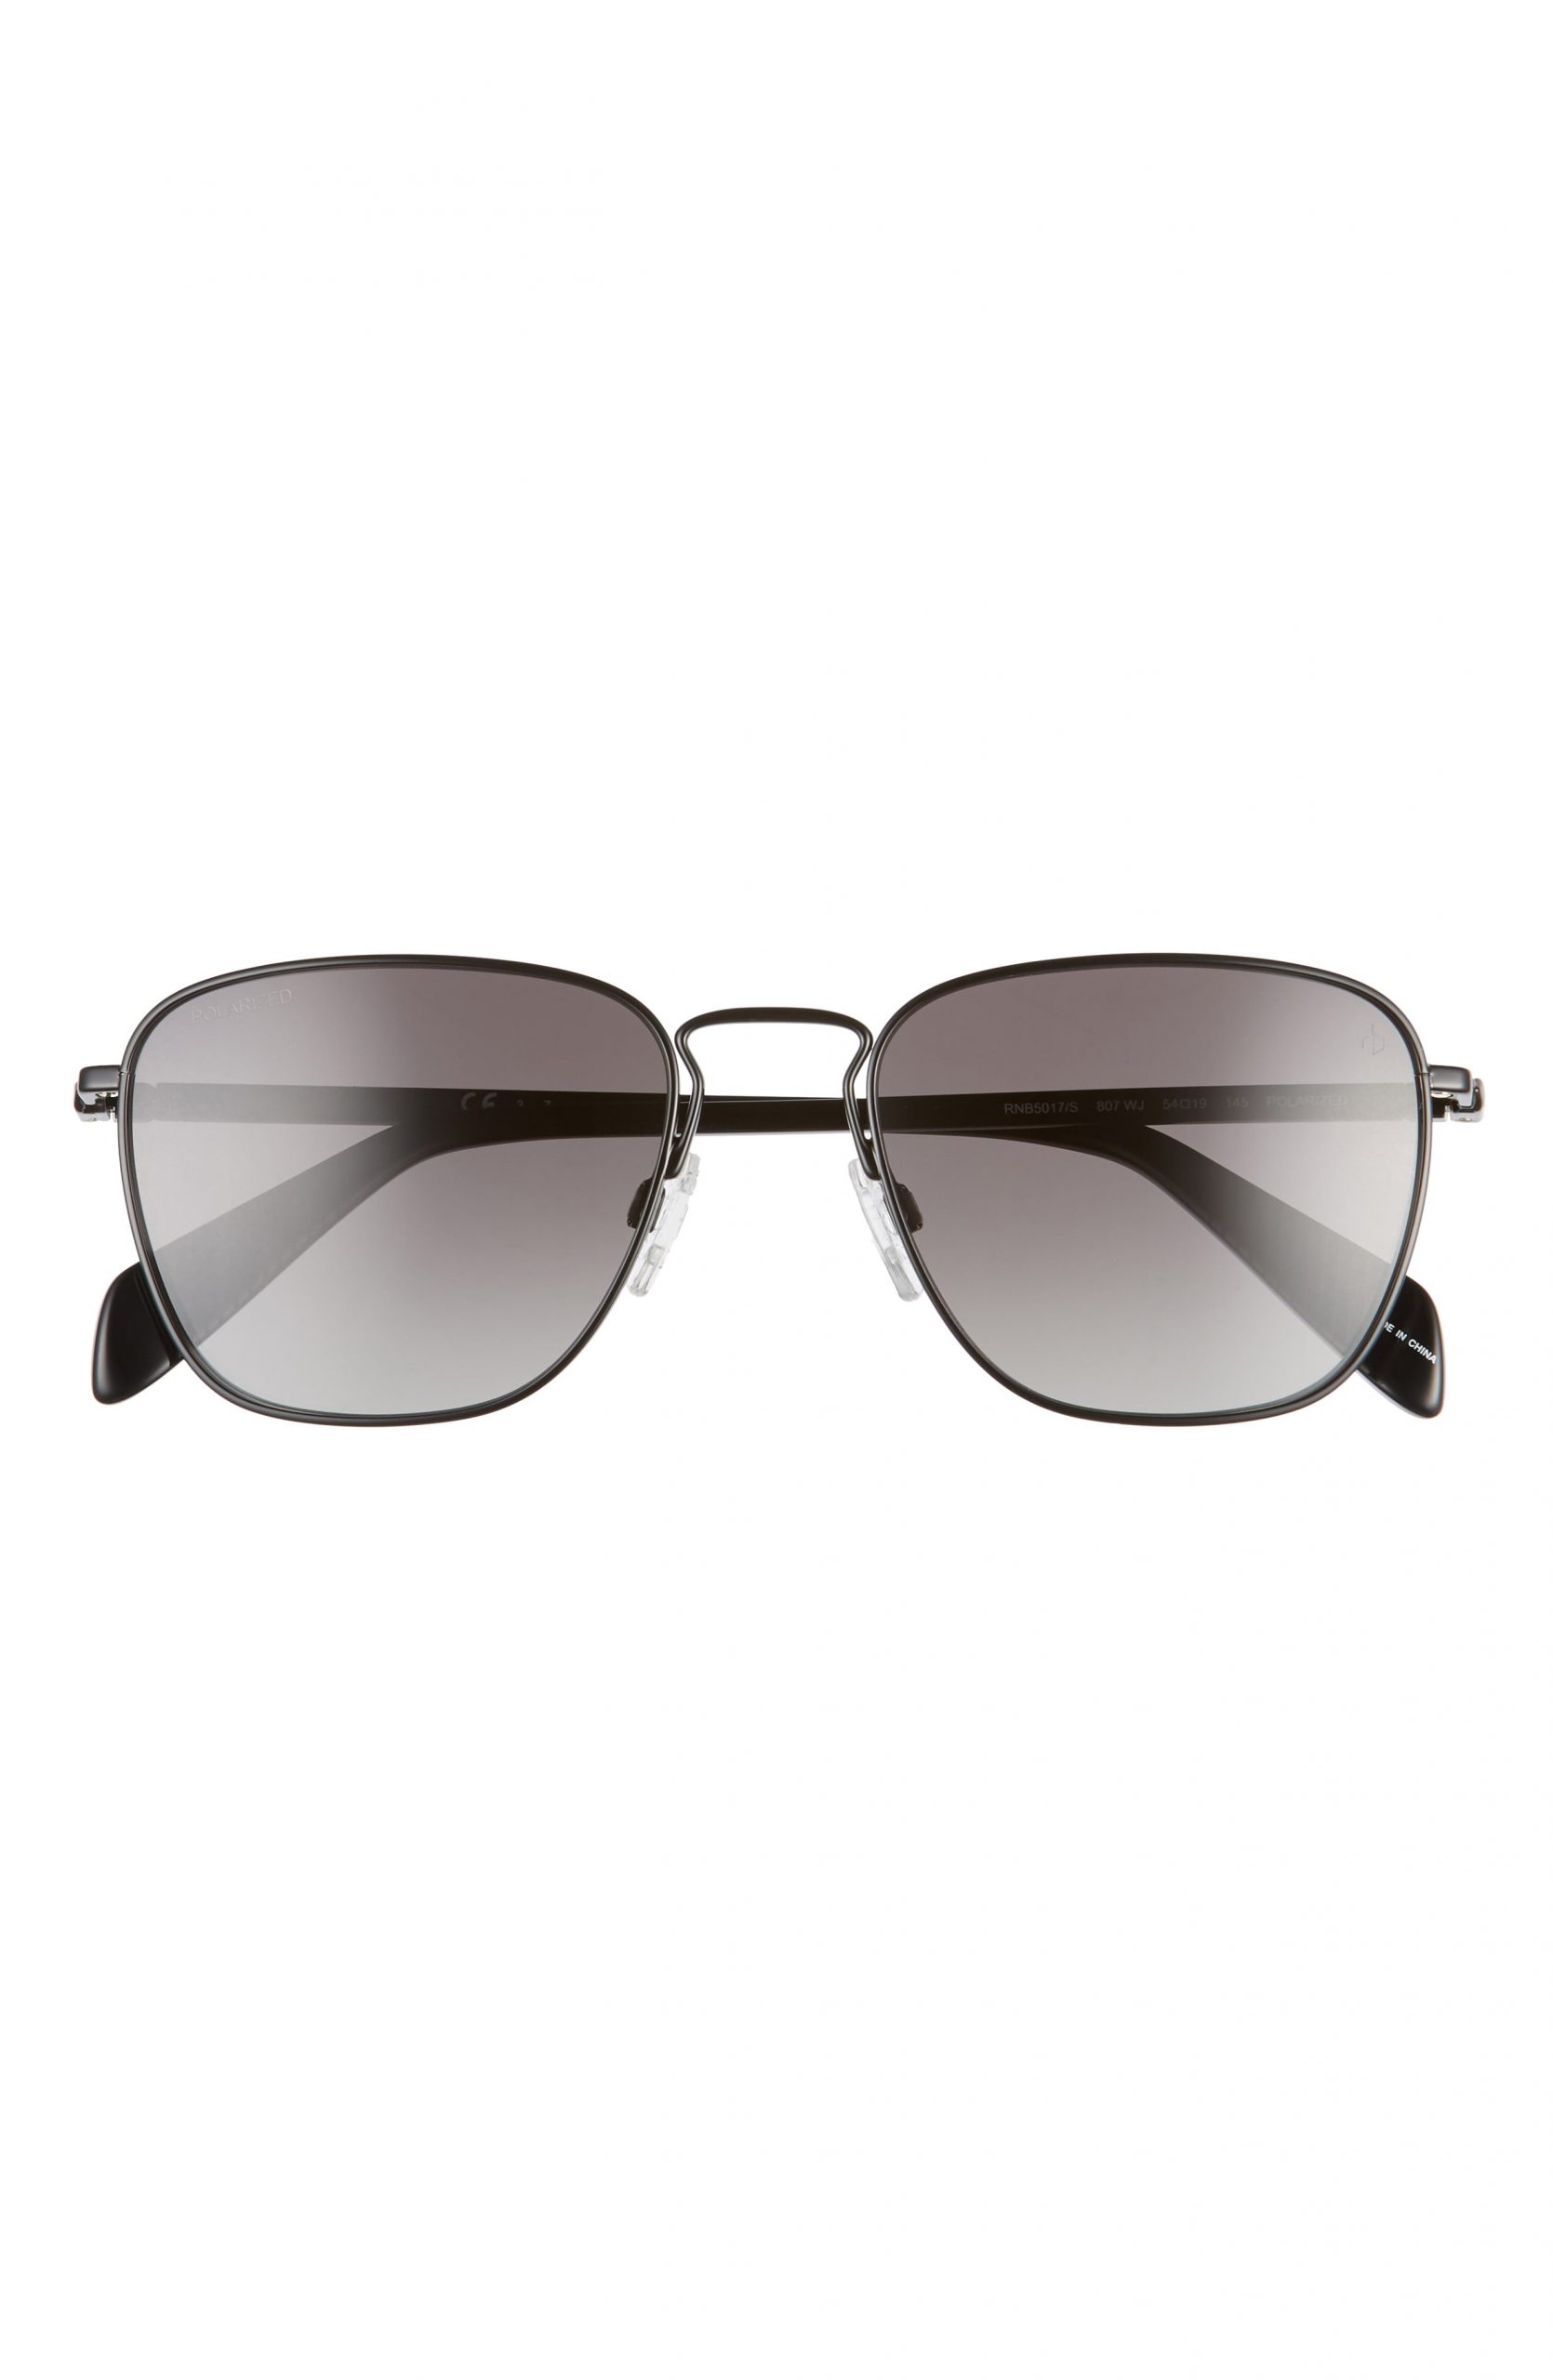 Men’s Rag & Bone 54mm Polarized Sunglasses - Black/ Grey | The Fashionisto